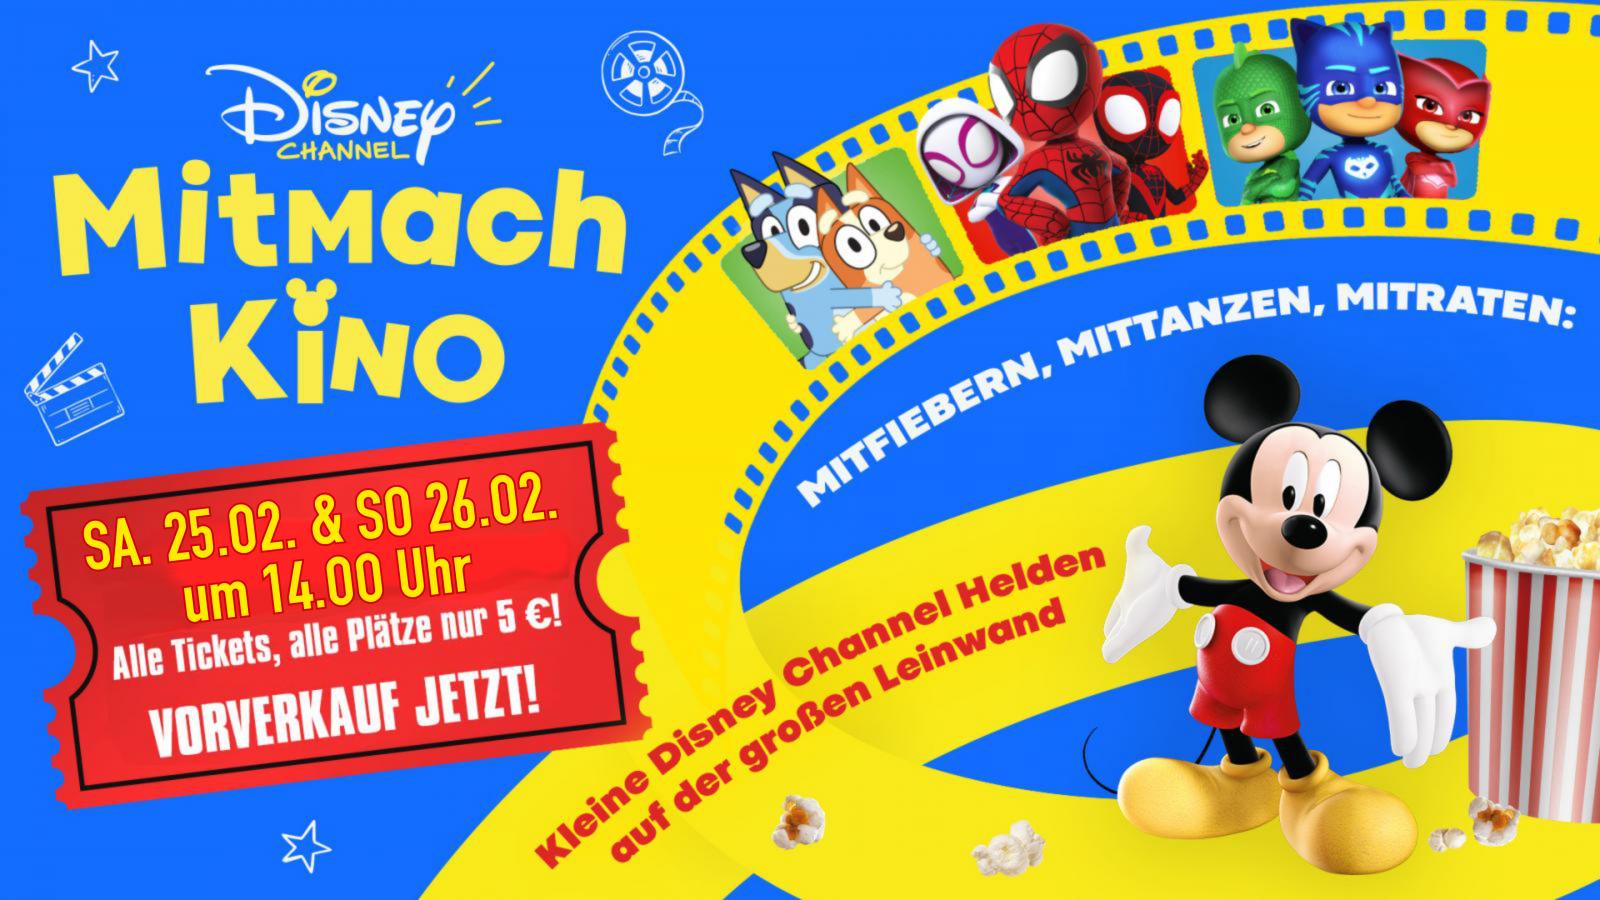 Disney Junior Mitmach-Kino am 25 & 26 Februar um 14.00 Uhr